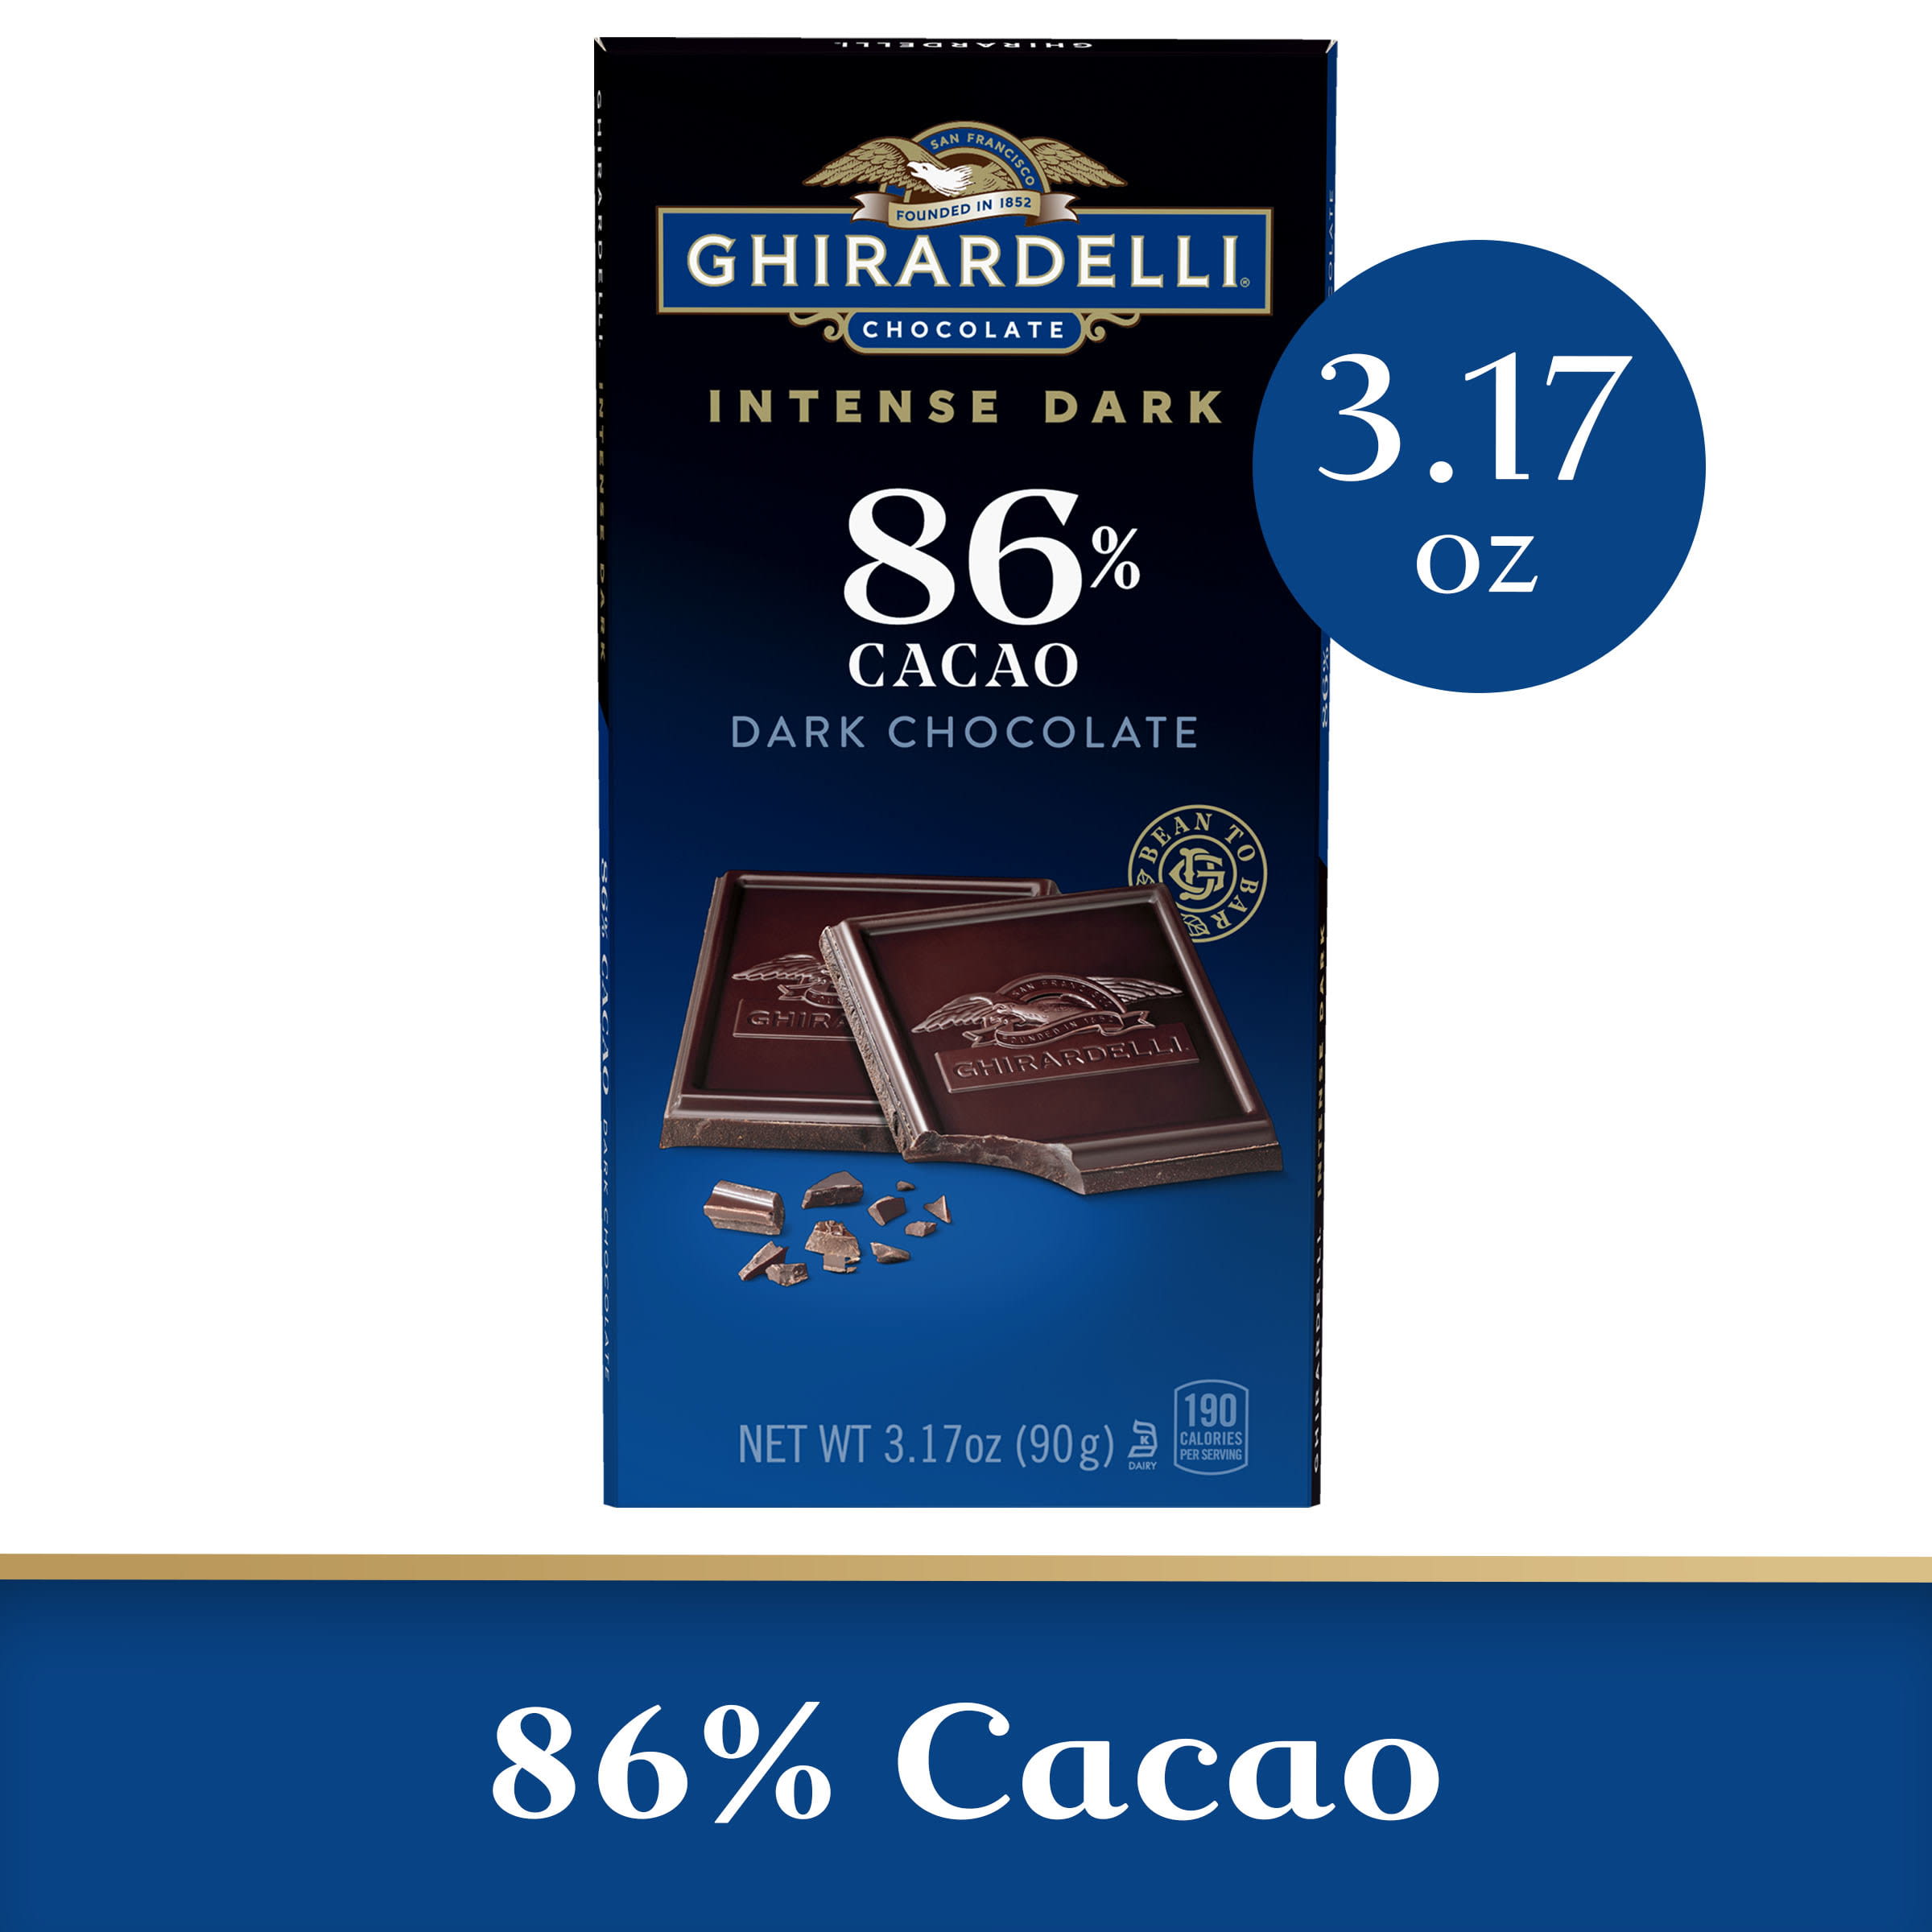 Lindt Excellence Dark Chocolate, Caramel - 3.5 oz